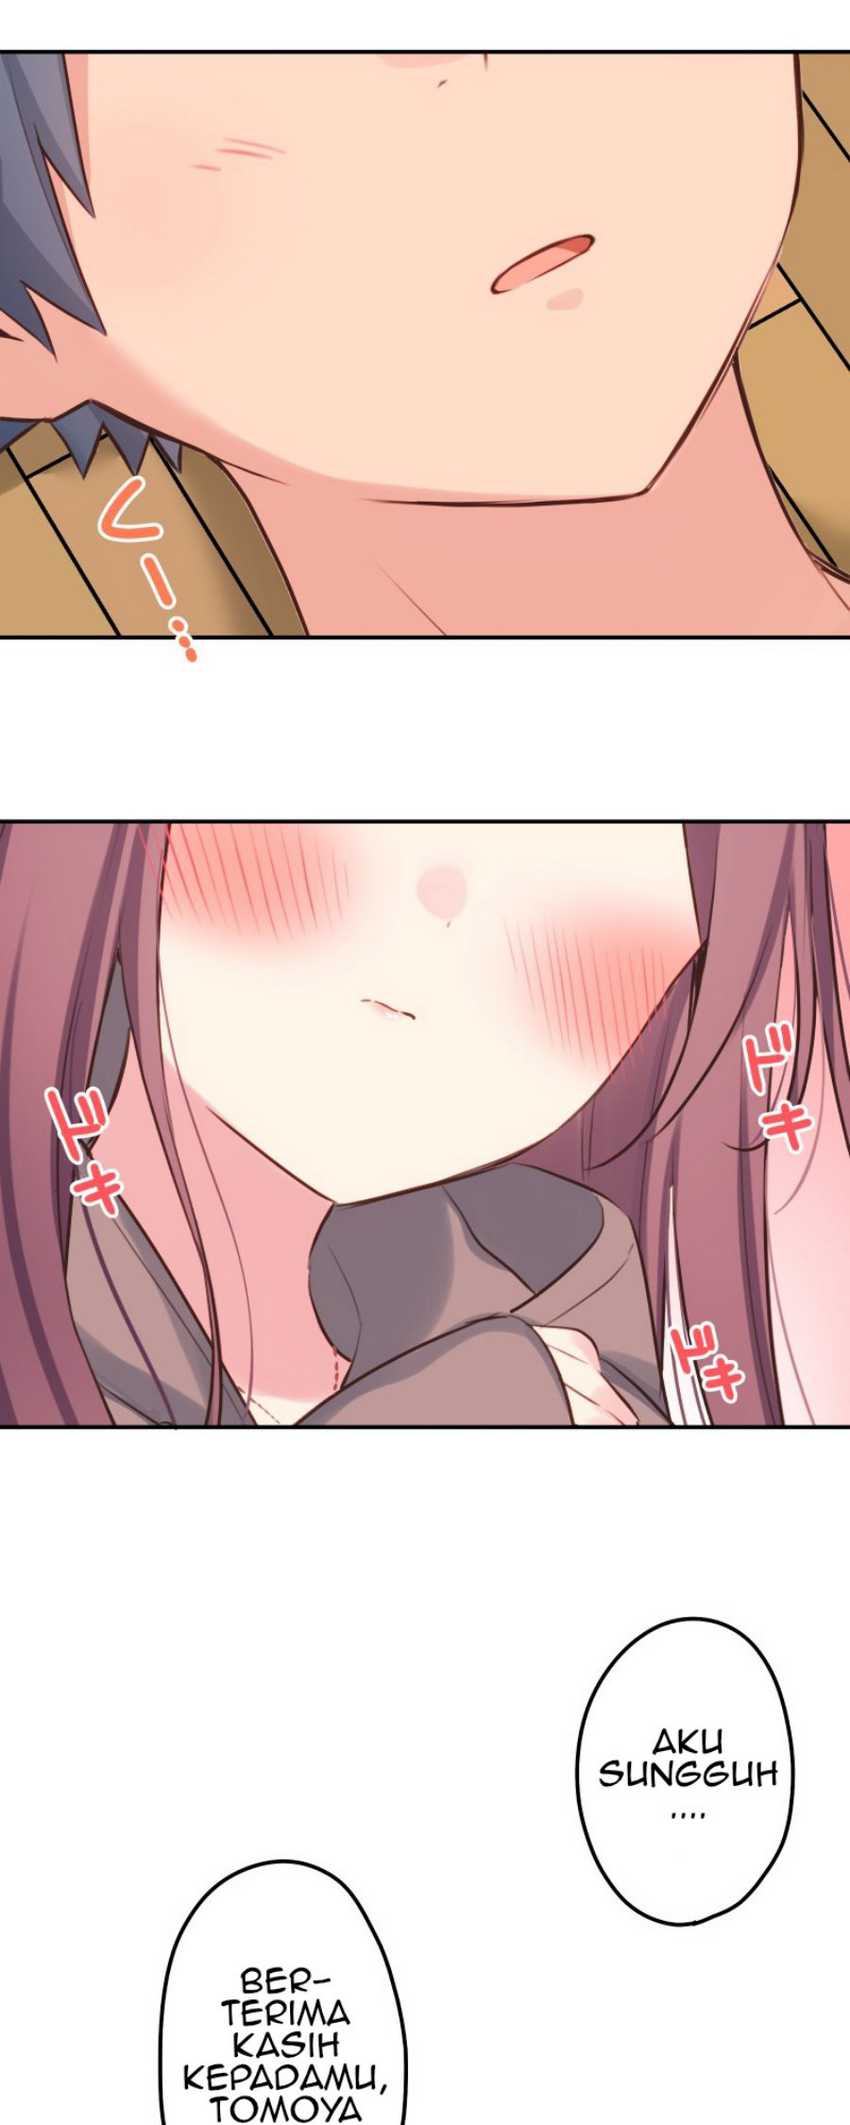 Waka-chan Is Flirty Again Chapter 120